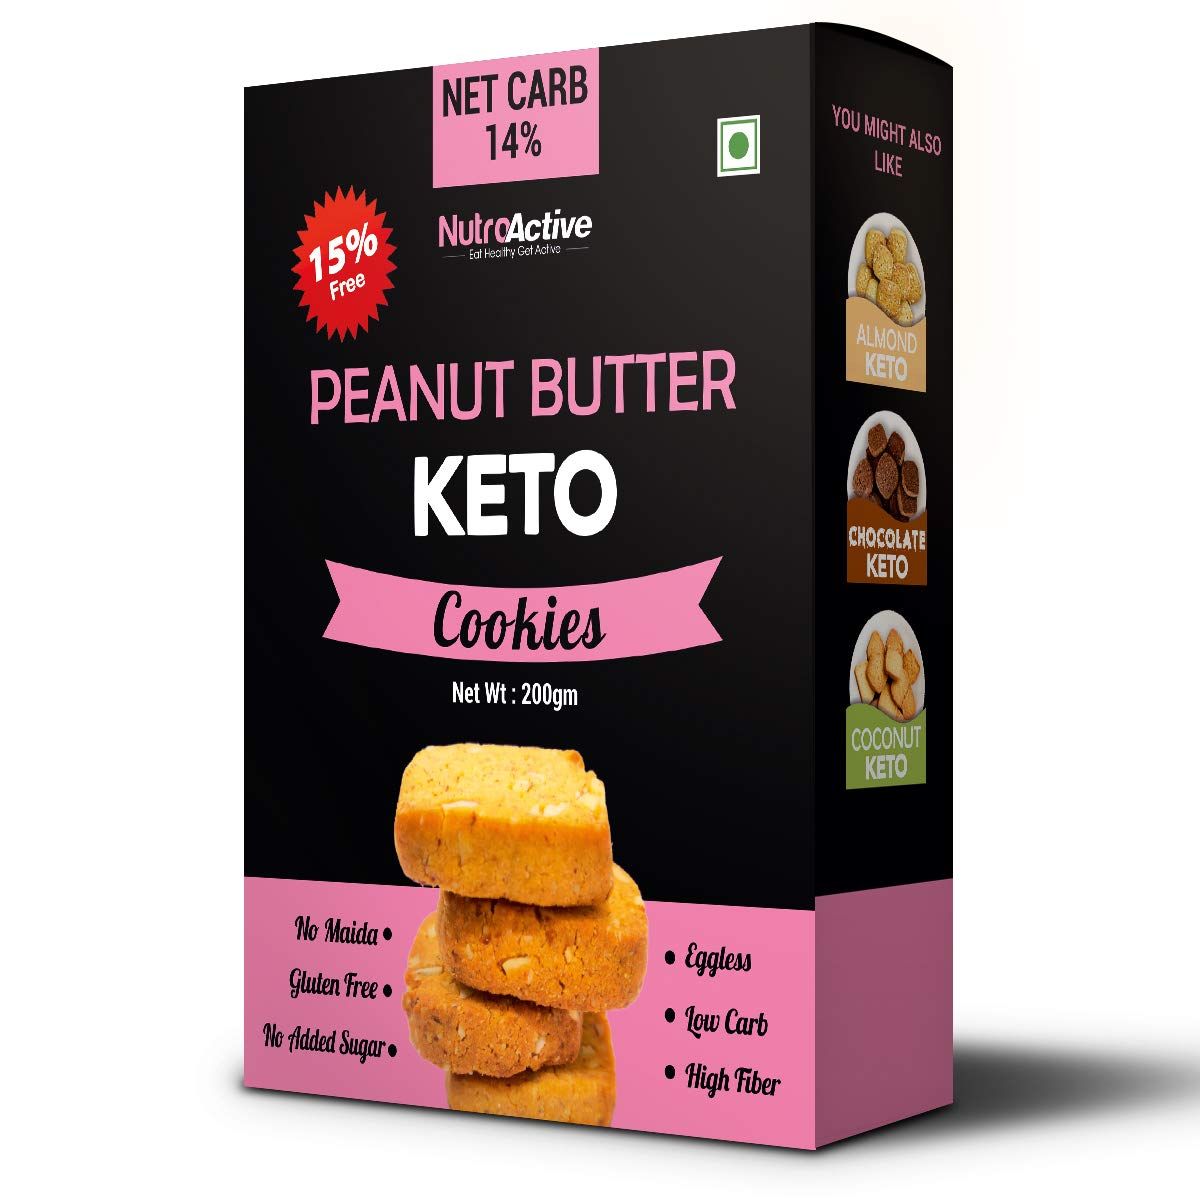 Nutro Active Butter Cookies Image